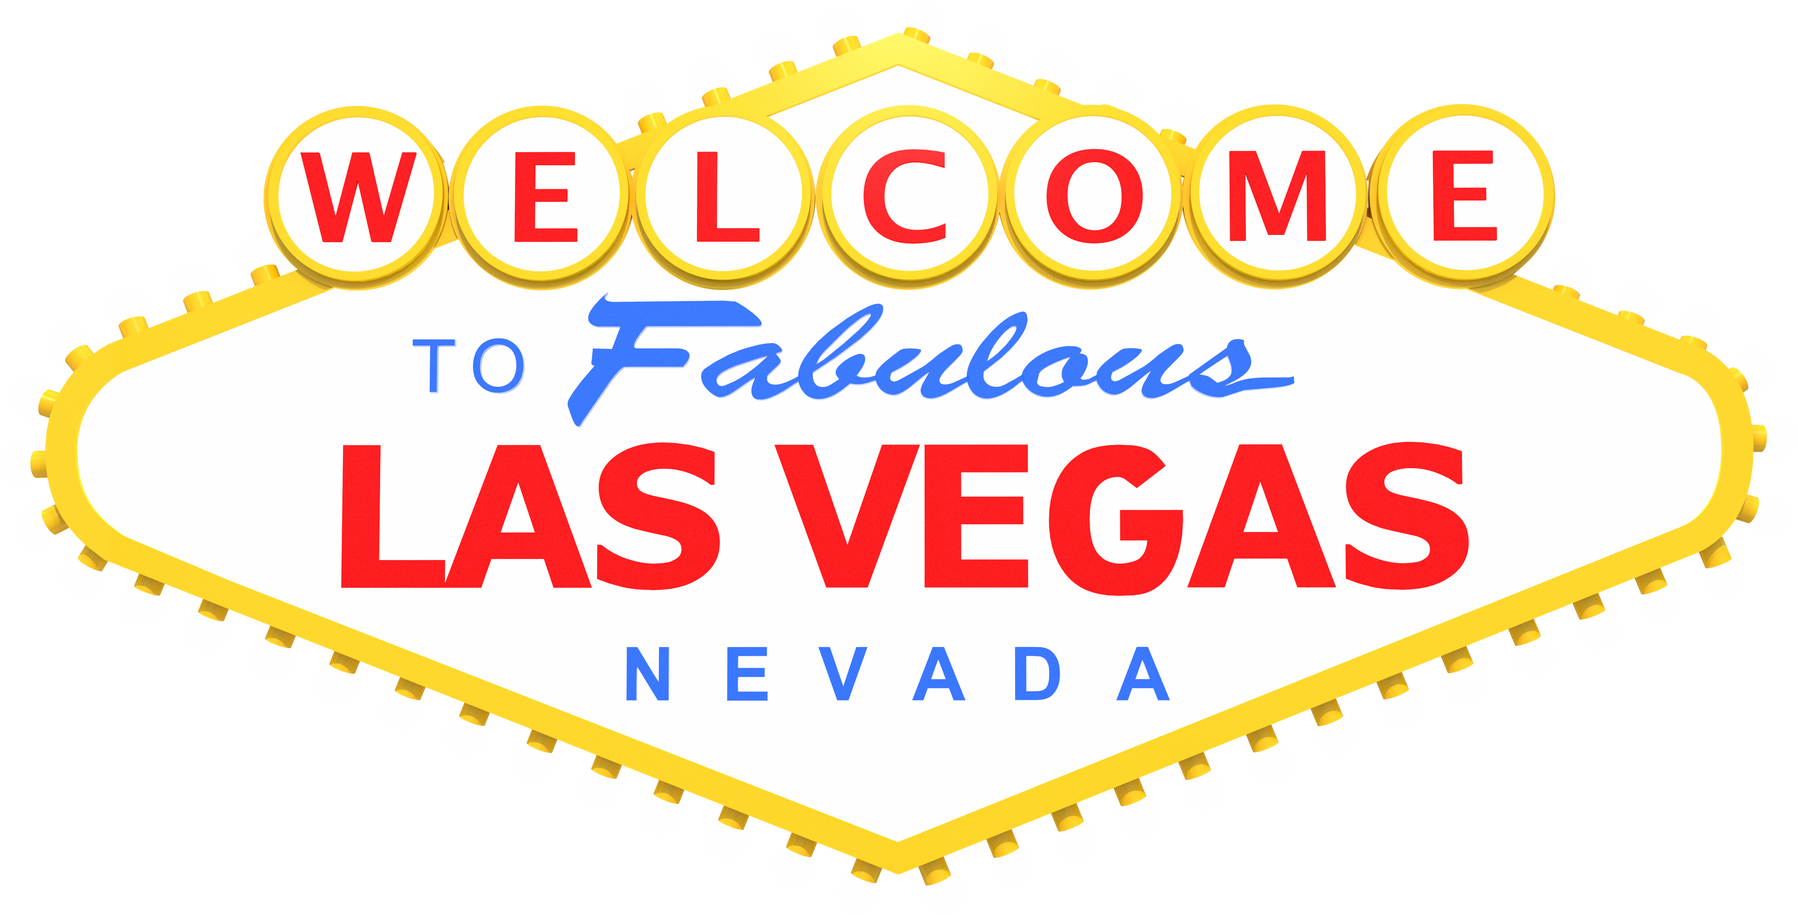 Las Vegas Welcome Sign Illustration